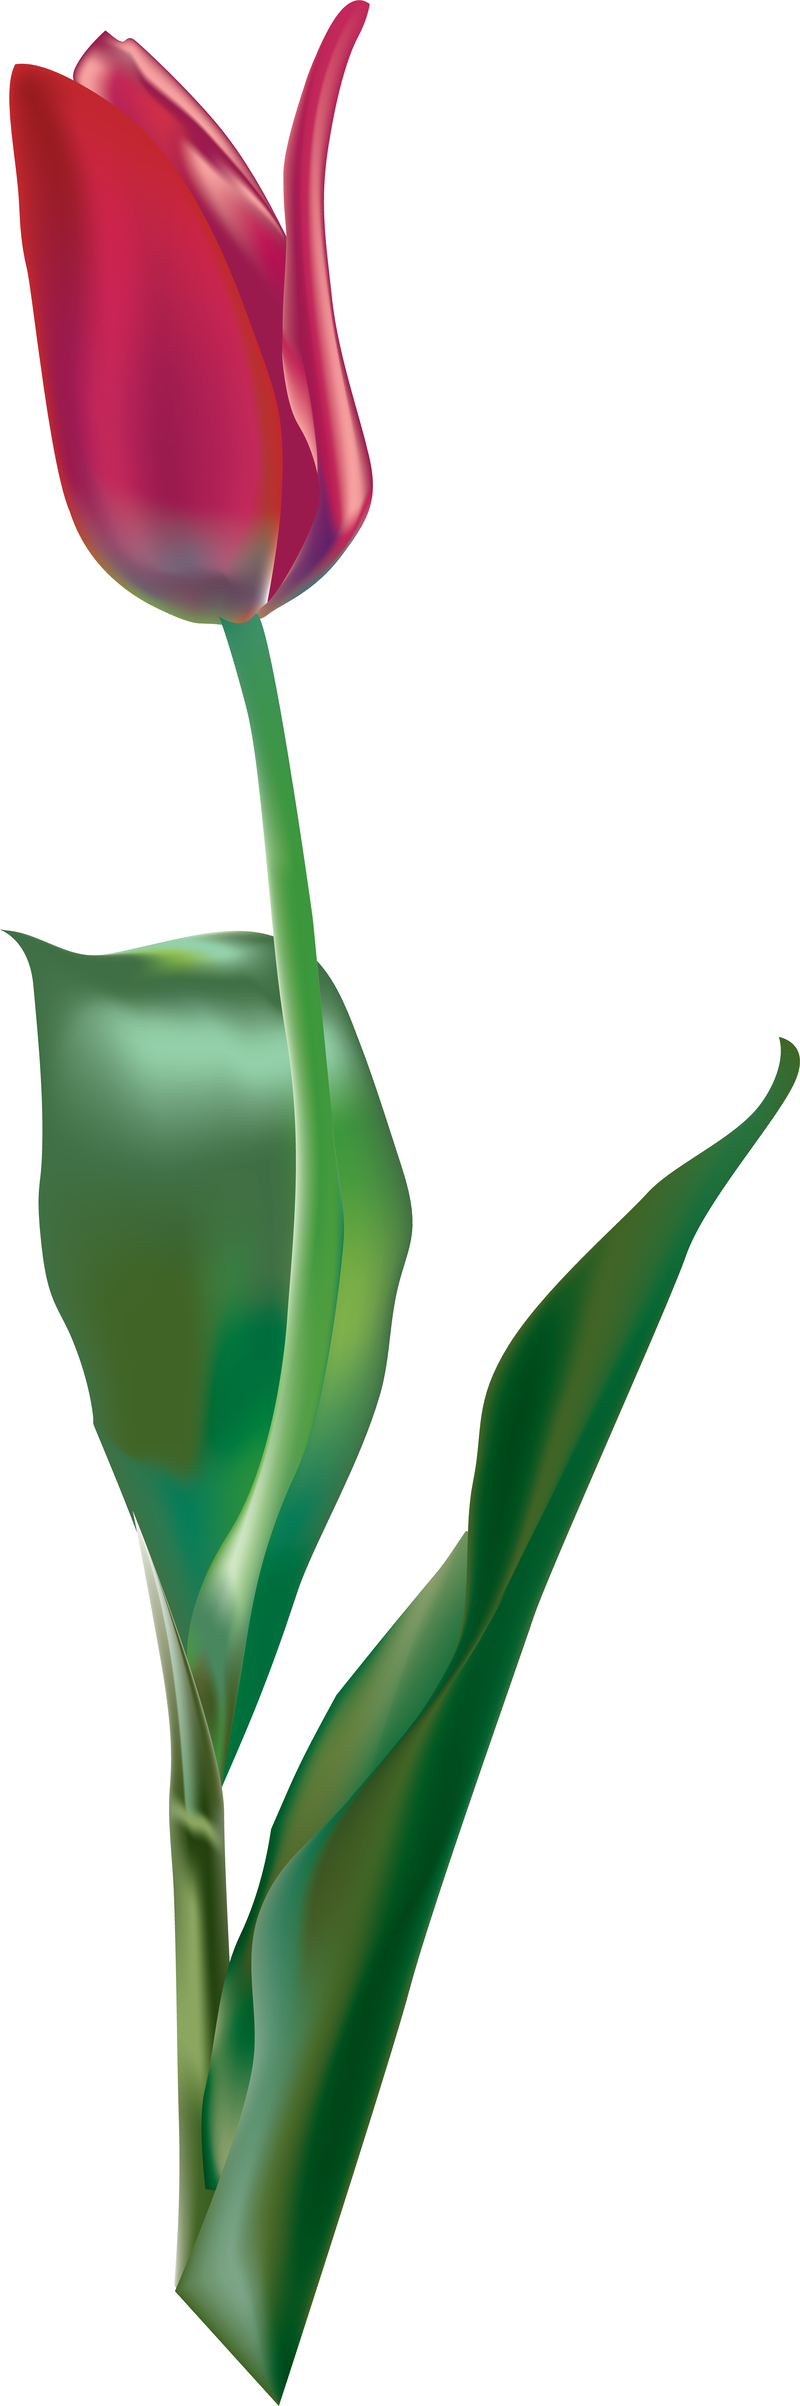 Tulip Vector - Vector download